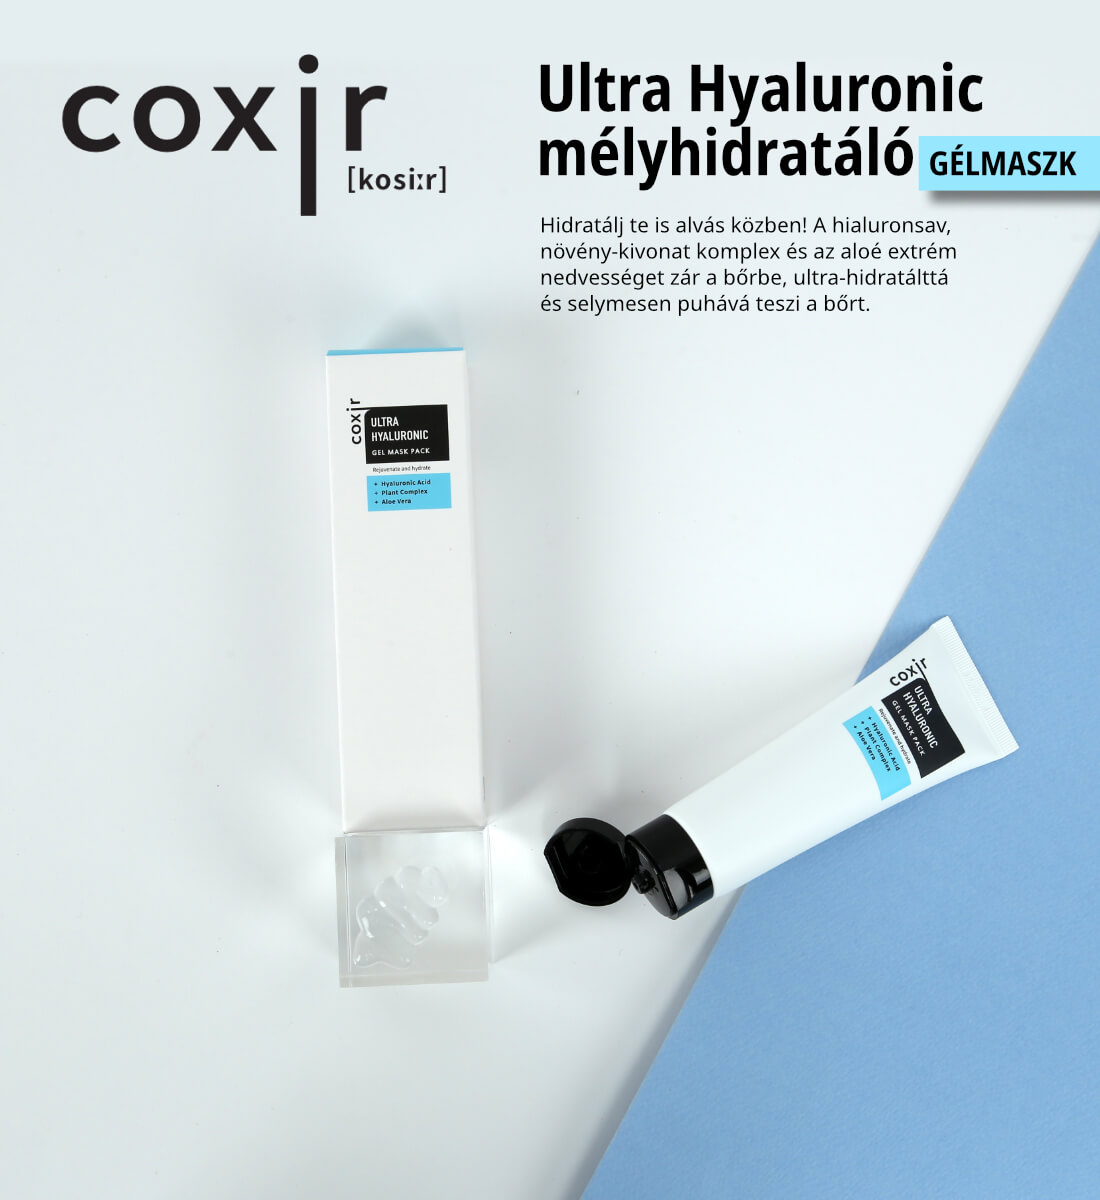 coxir-ultra-hyaluron-melyhidratalo-gelmaszk-leiras